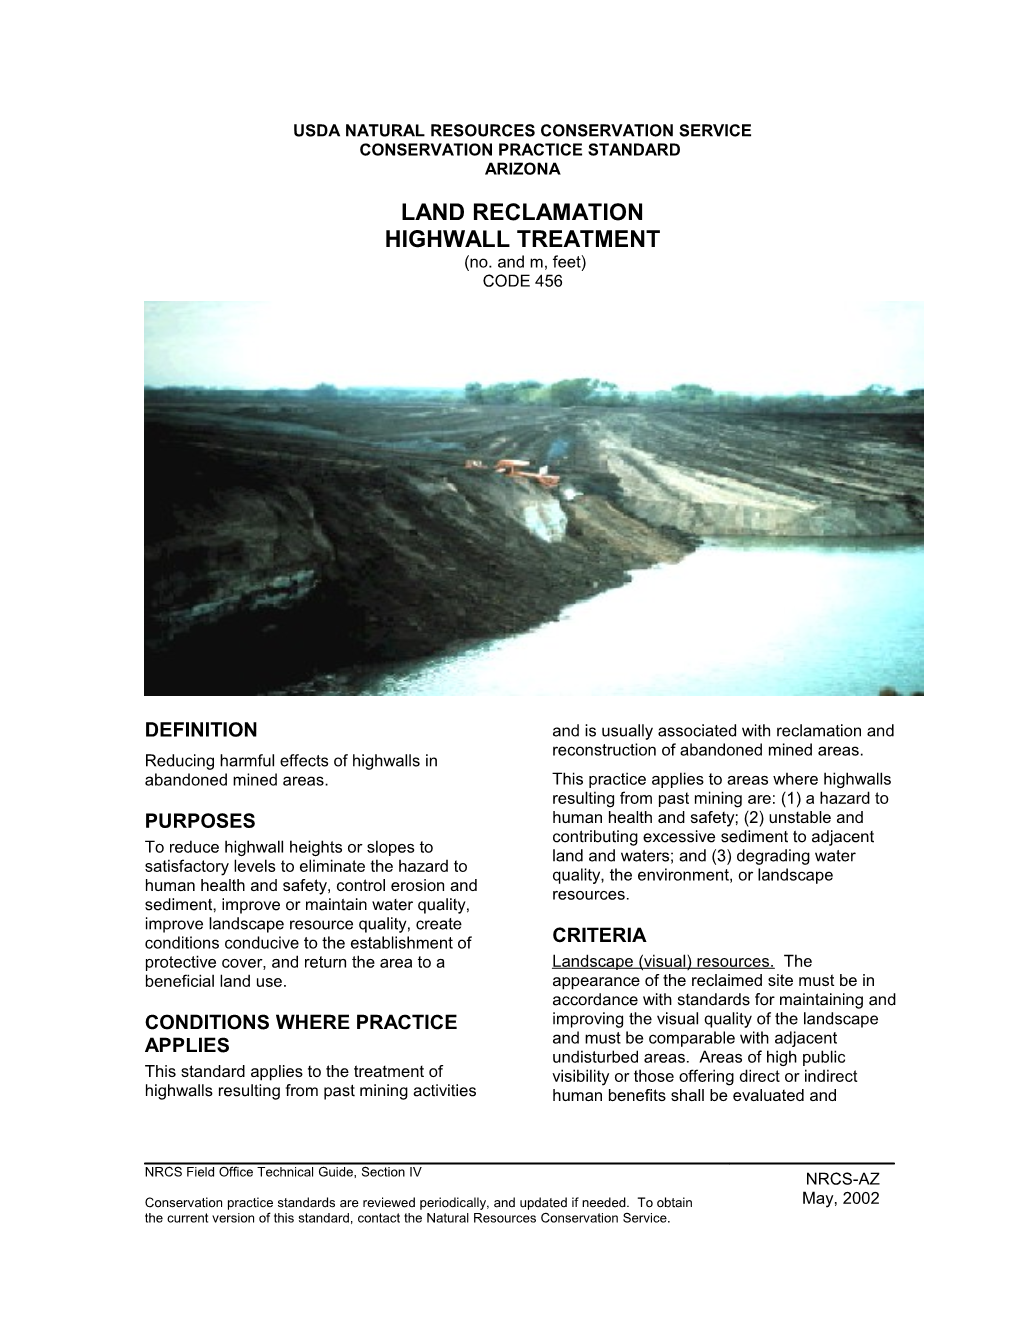 Land Reclamation, Highwall Treatment 456